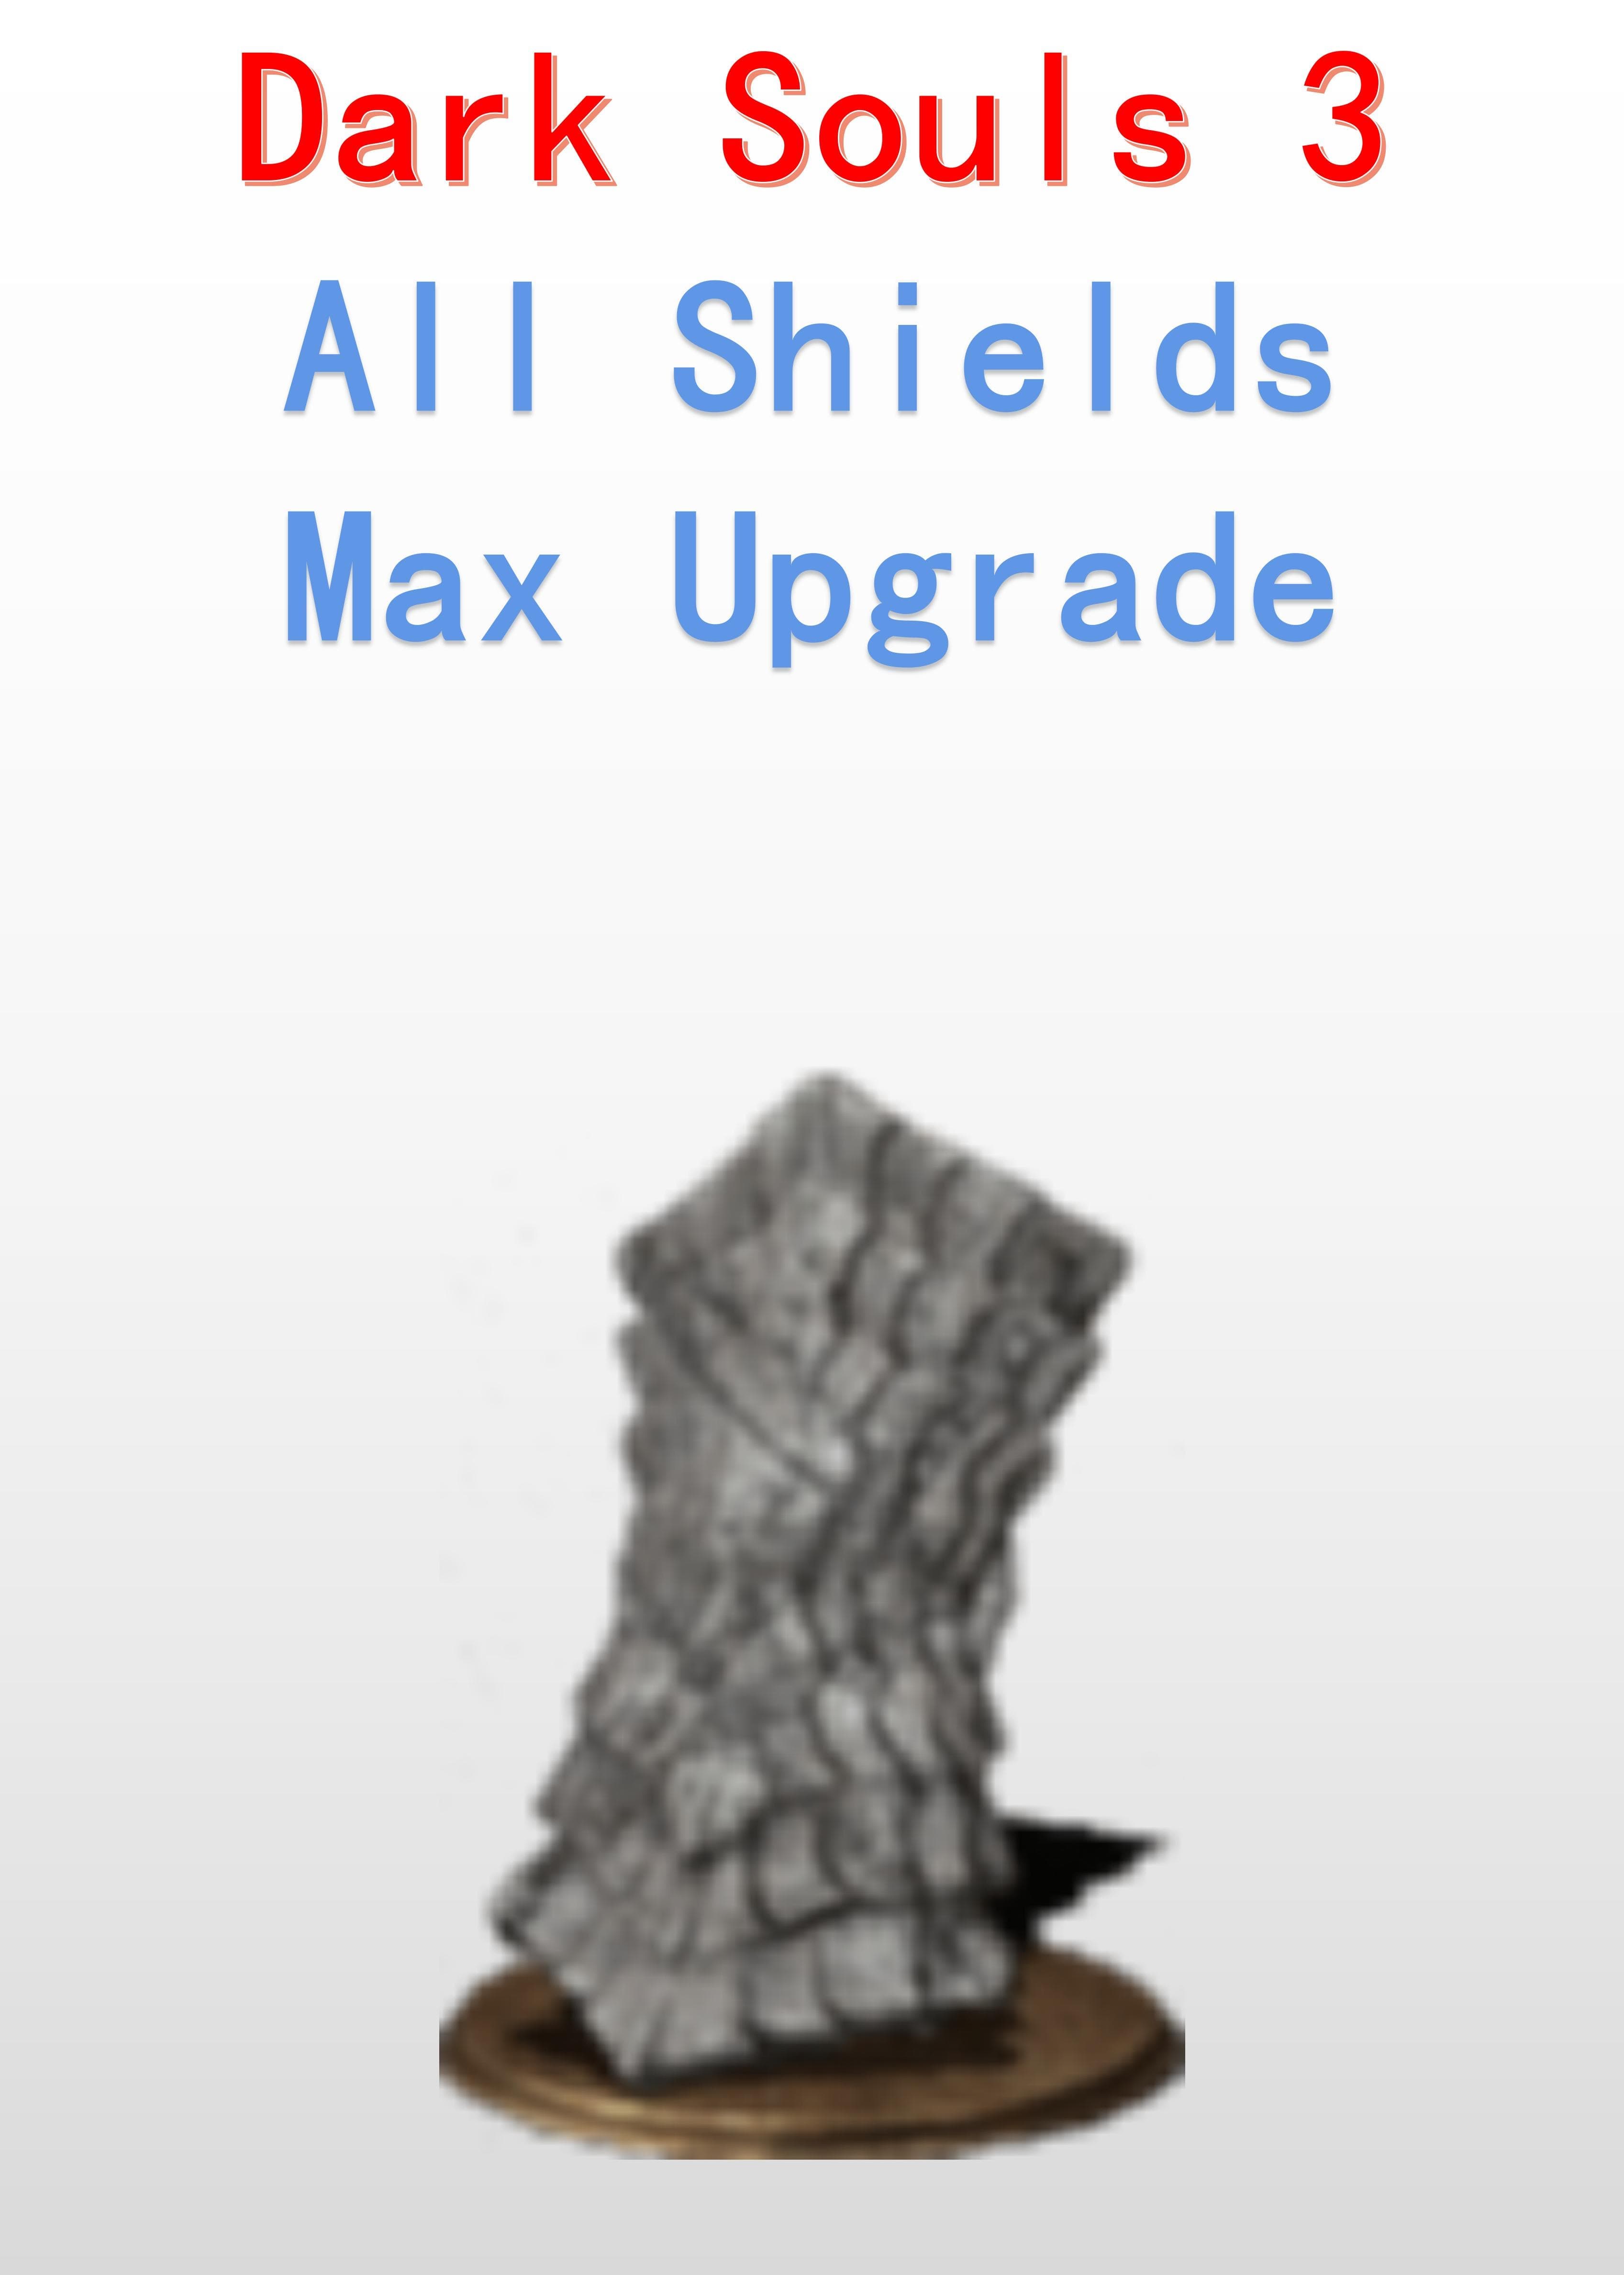 All Shields Max Upgraded - Dark Souls 3